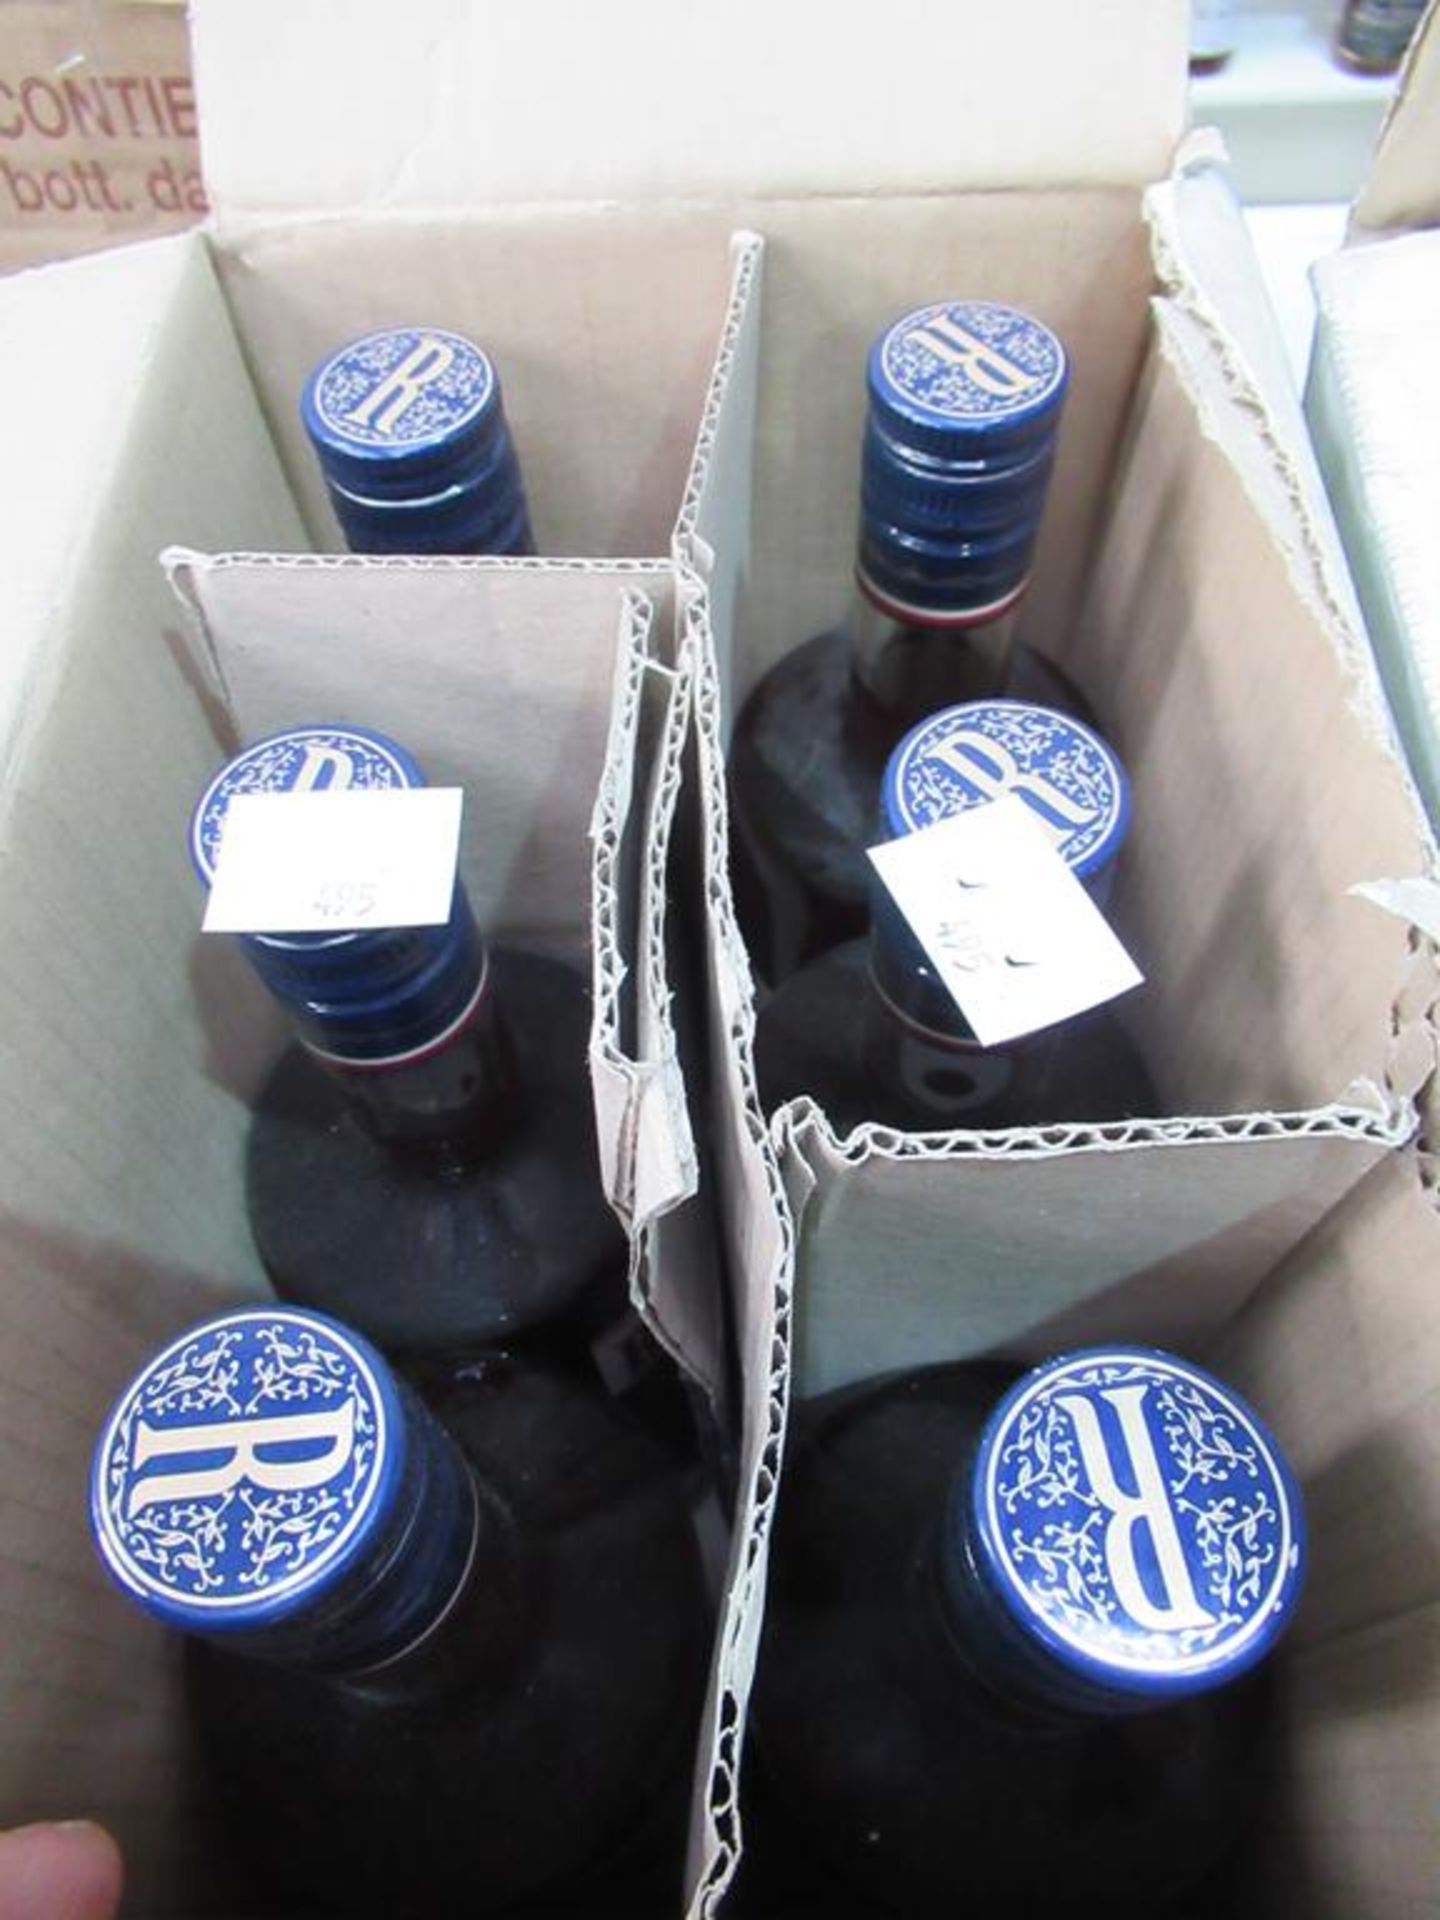 6 x bottles of Rinomato 'L'Aperitivo Deciso' - Image 4 of 4